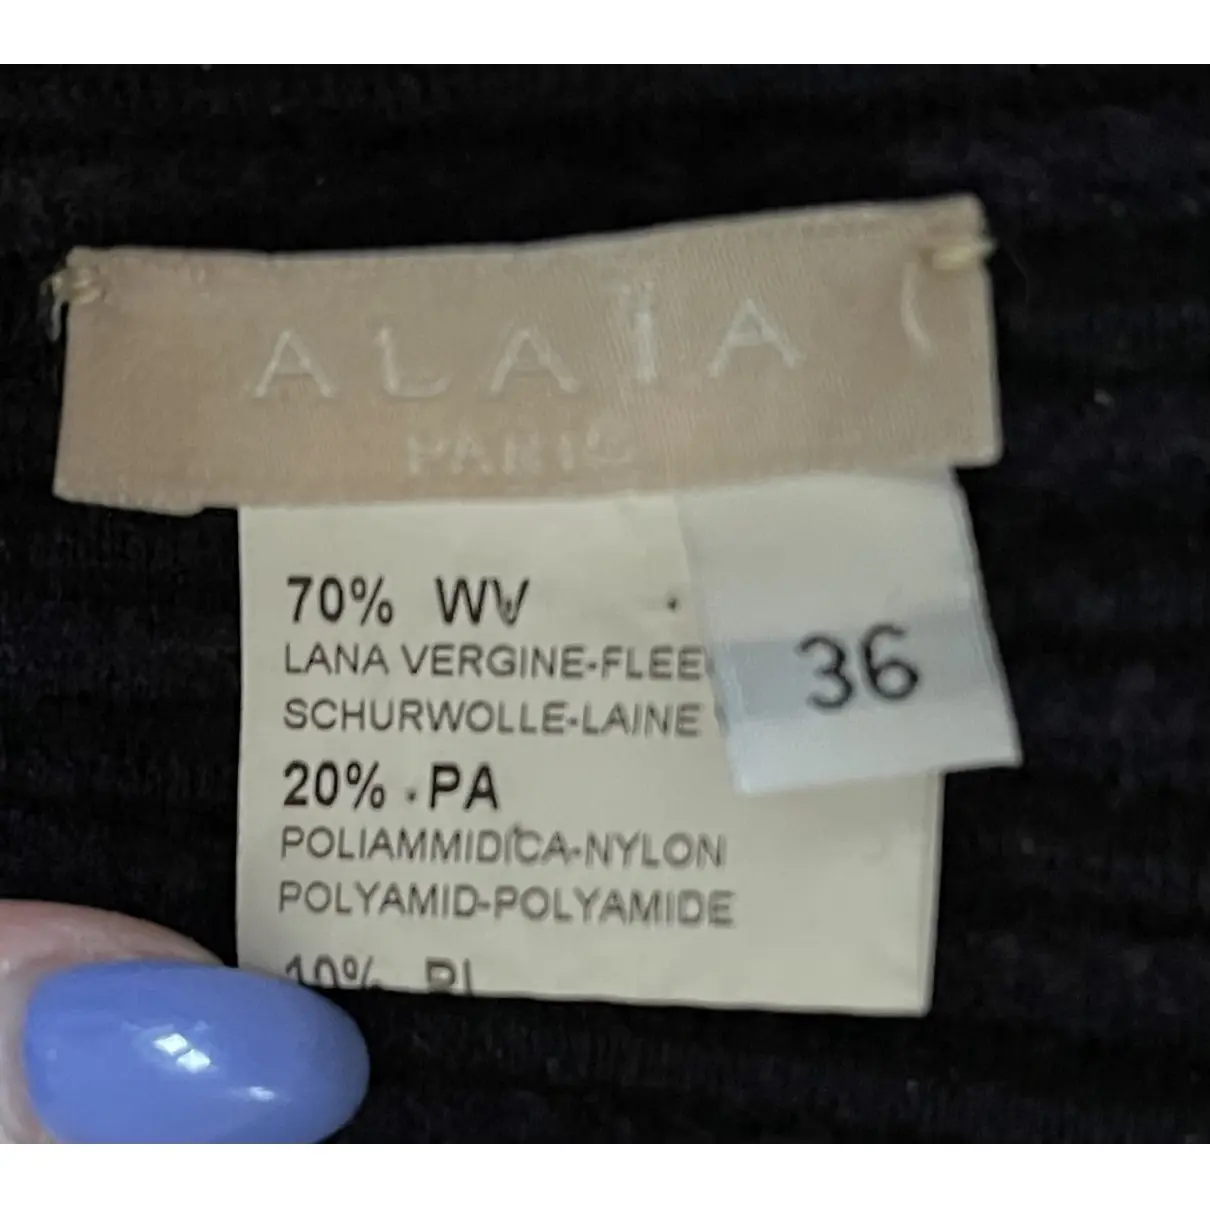 Buy Alaïa Wool mid-length dress online